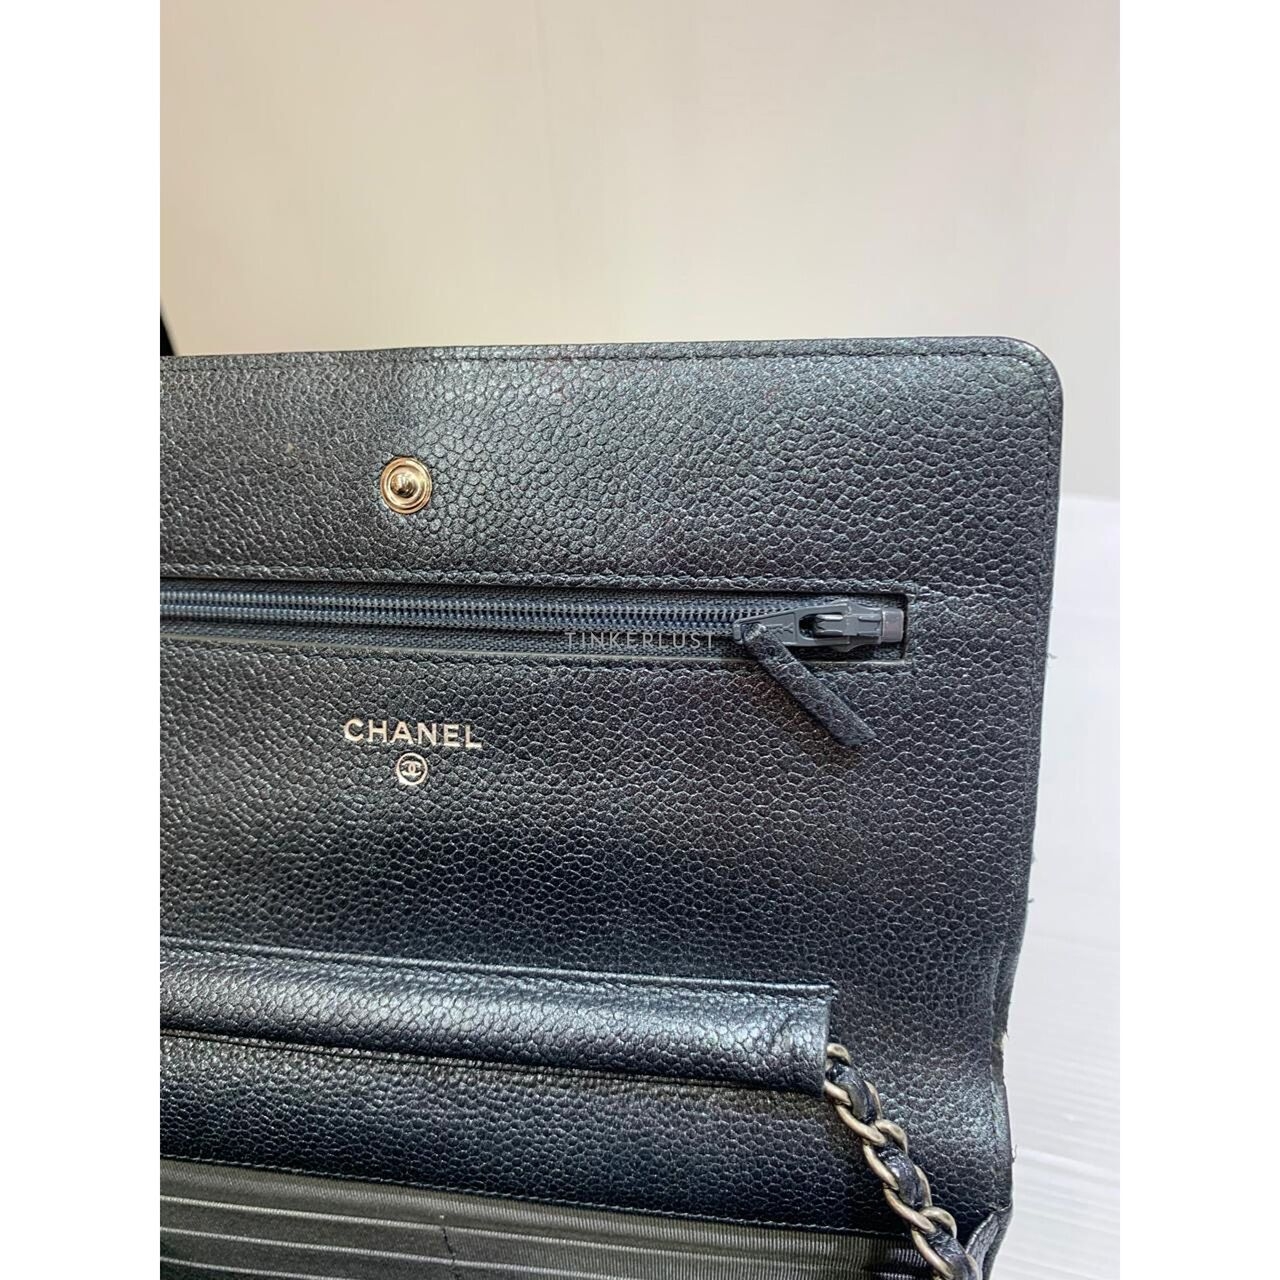 Chanel Classic WOC Grey Iridescent Caviar RHW #20 Sling Bag